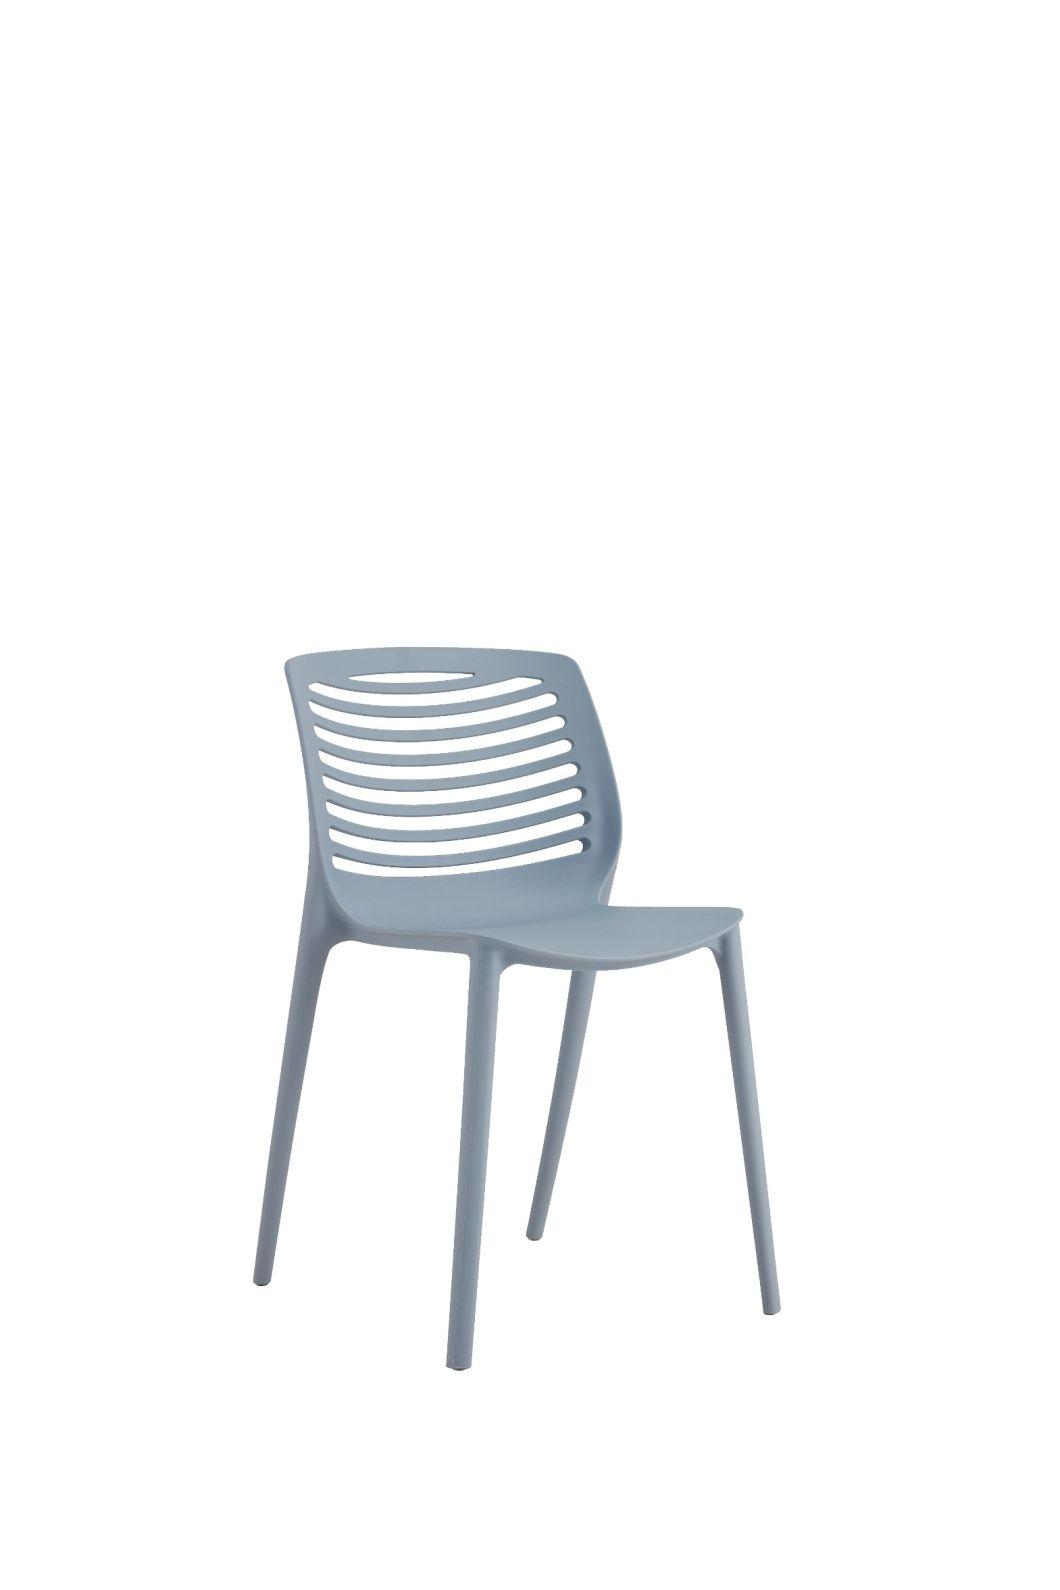 Plastic Durable Restaurant Dining Restaurant Chair